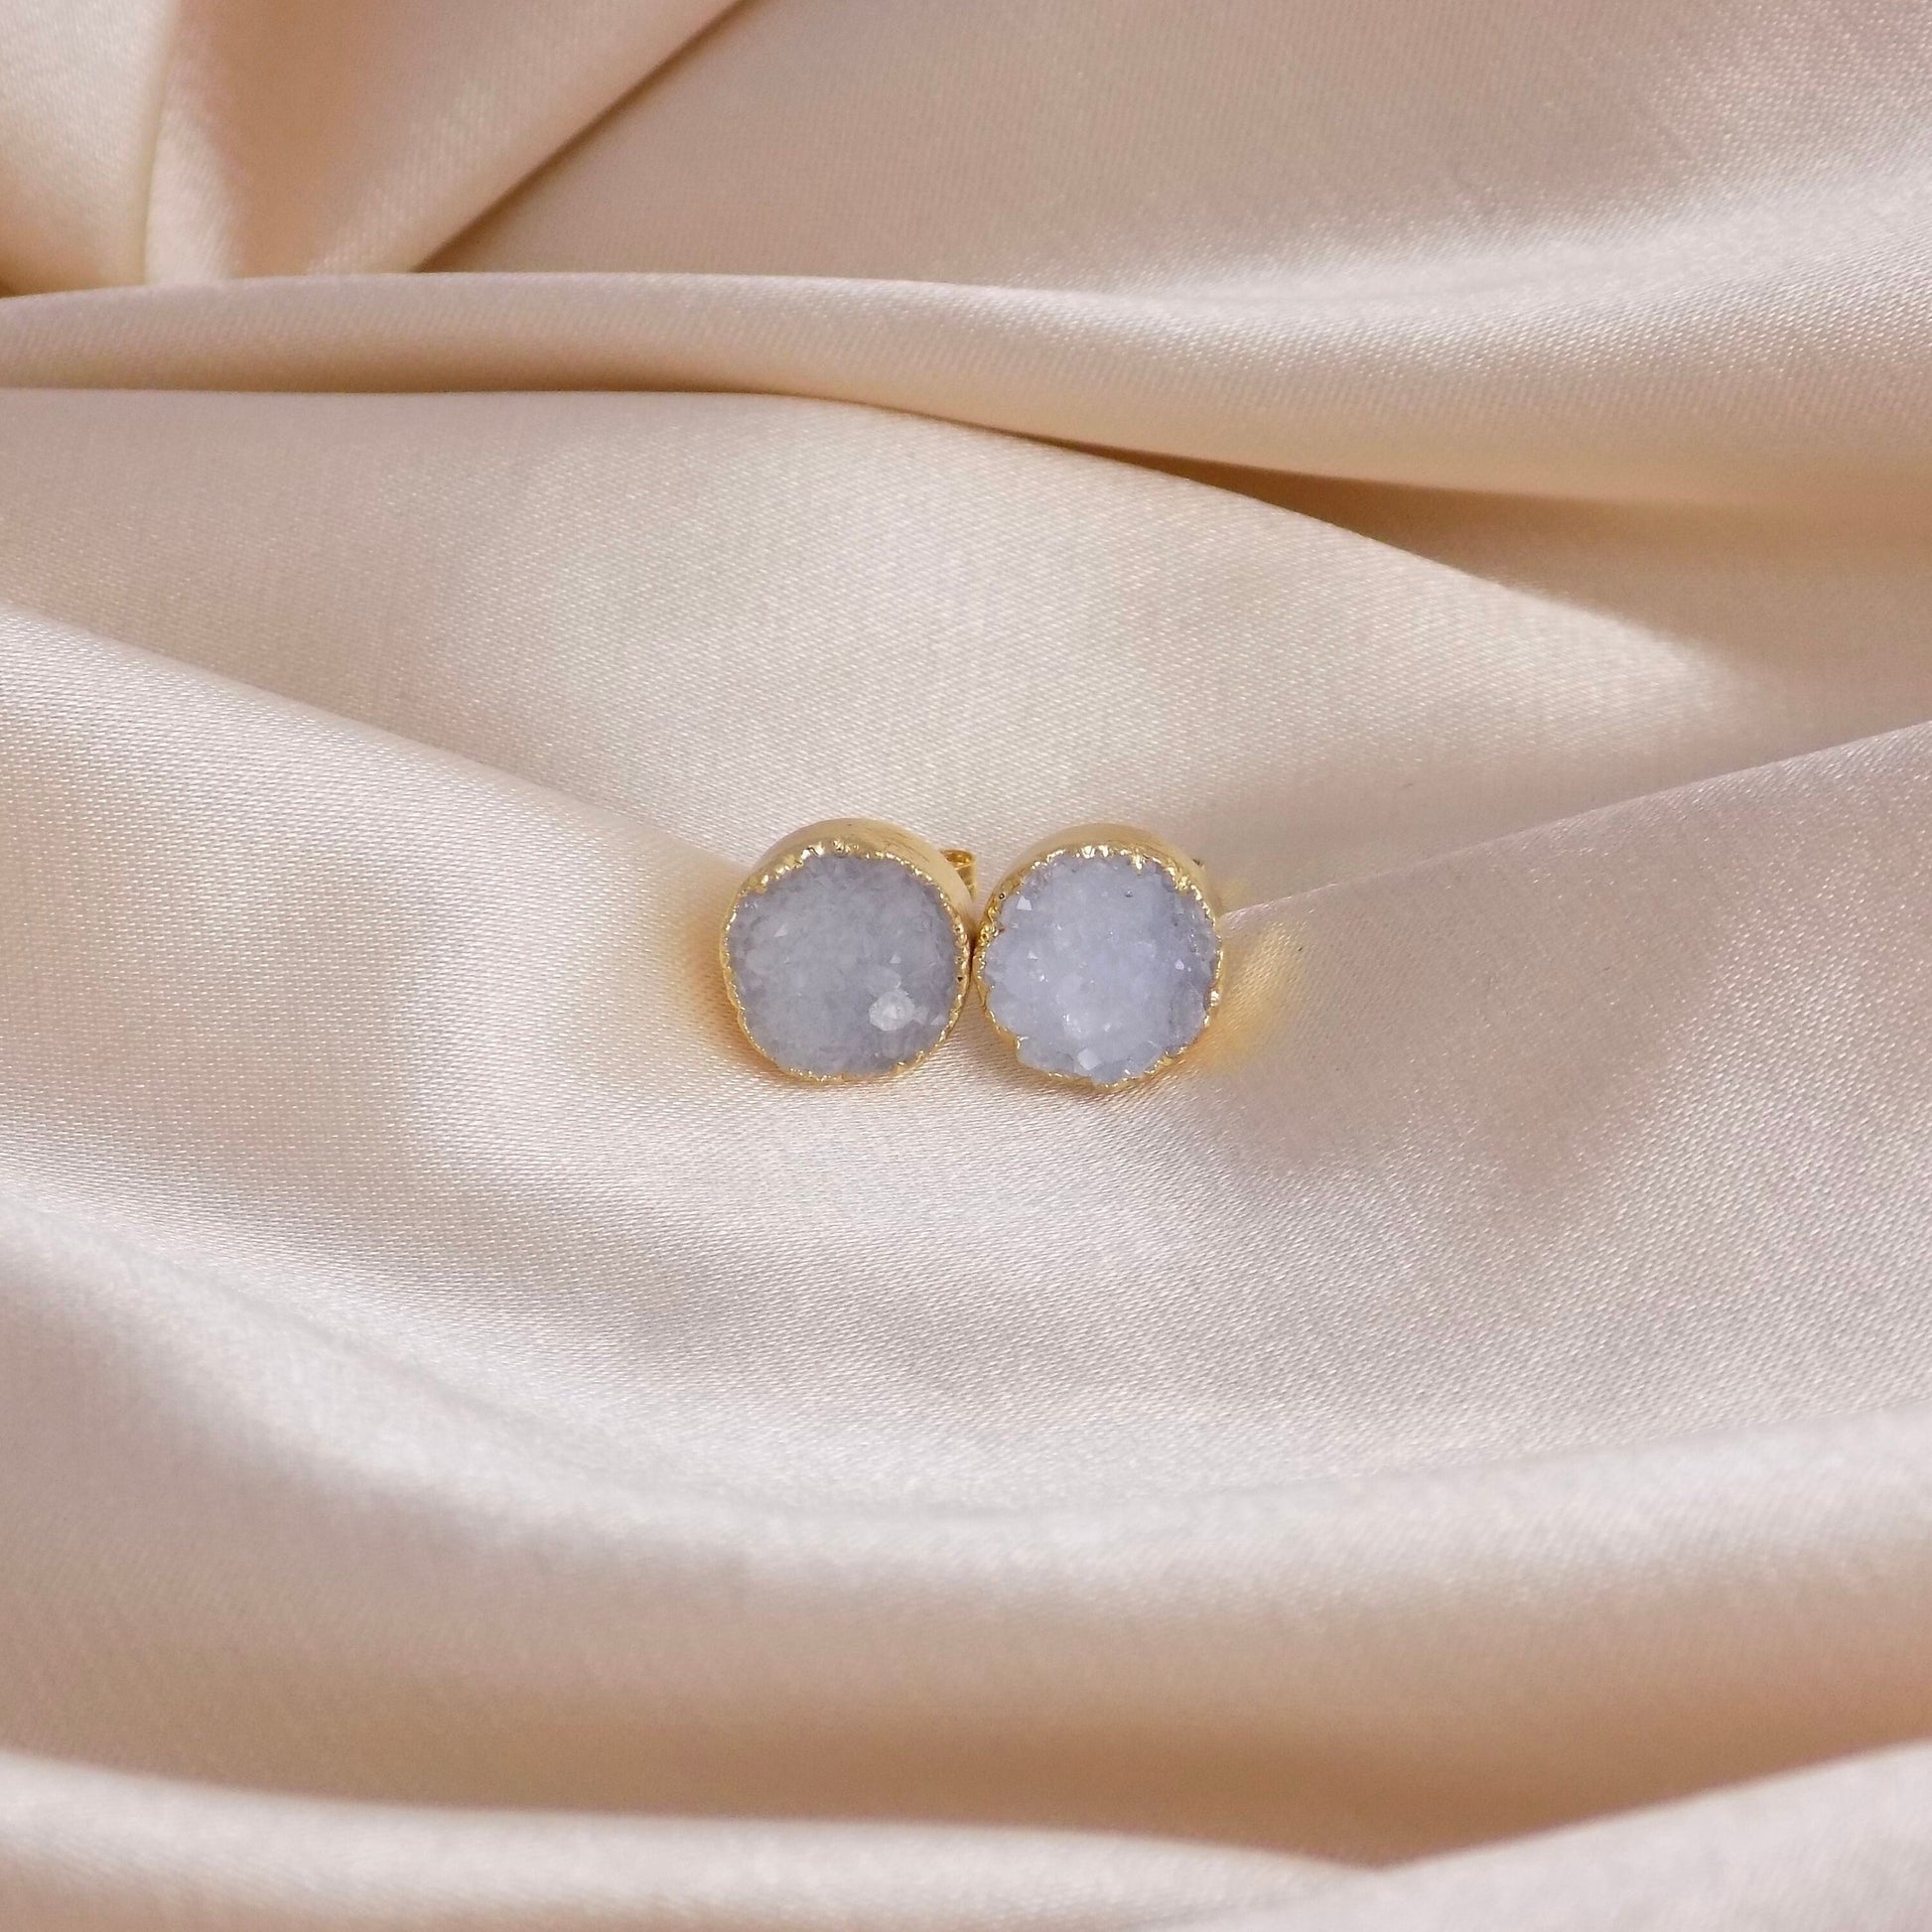 Druzy Studs, Real Druzy Earrings Round, Gray Druzy Stud Earrings, Raw Stone Earrings, Bridesmaid Gift, M6-731